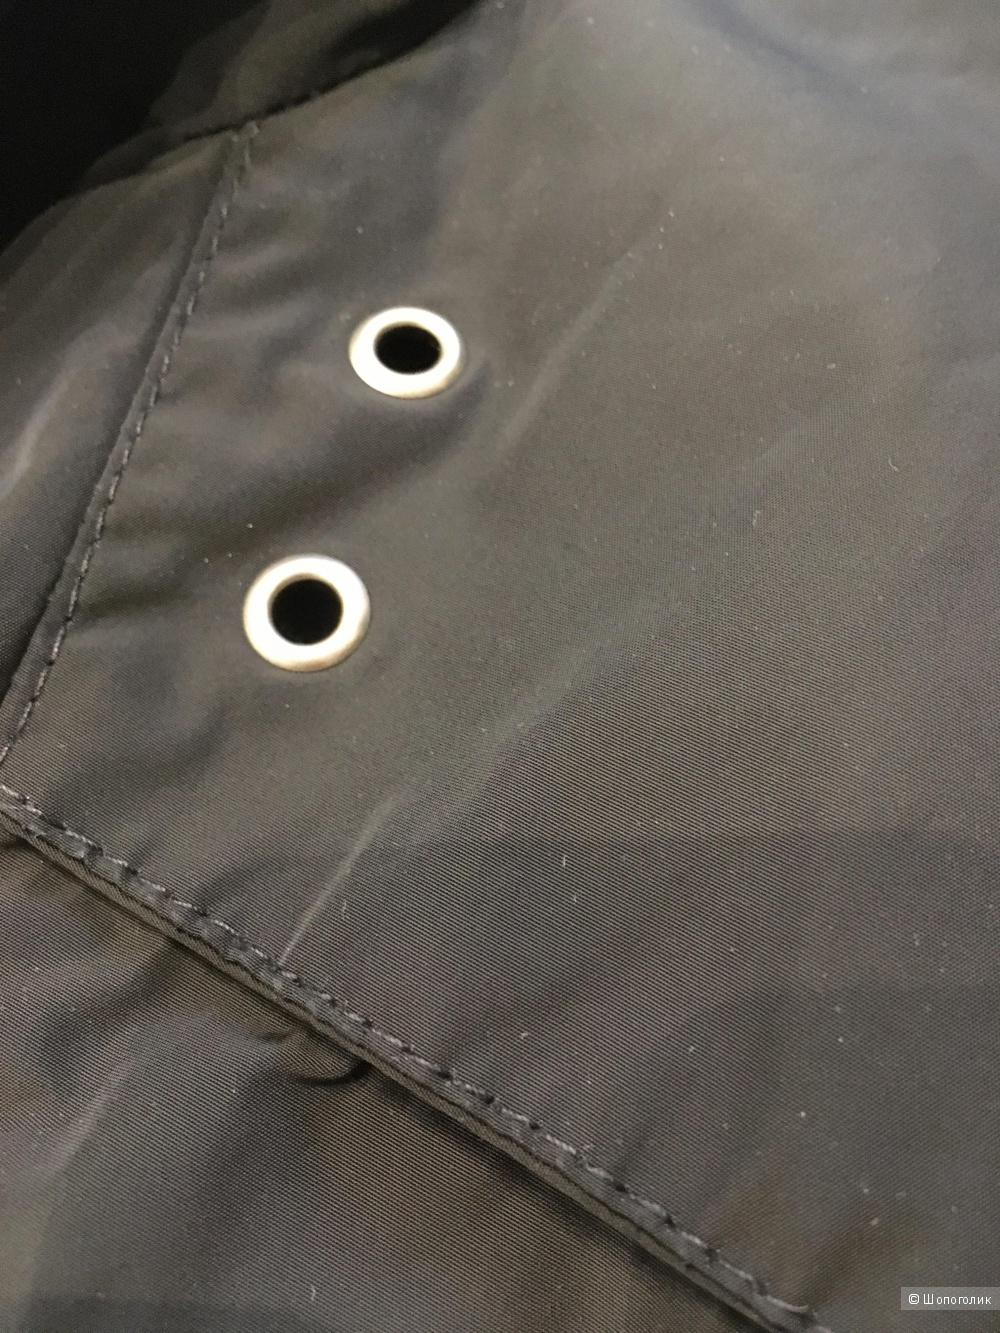 Куртка мужская Plaxa, 48-50 размер